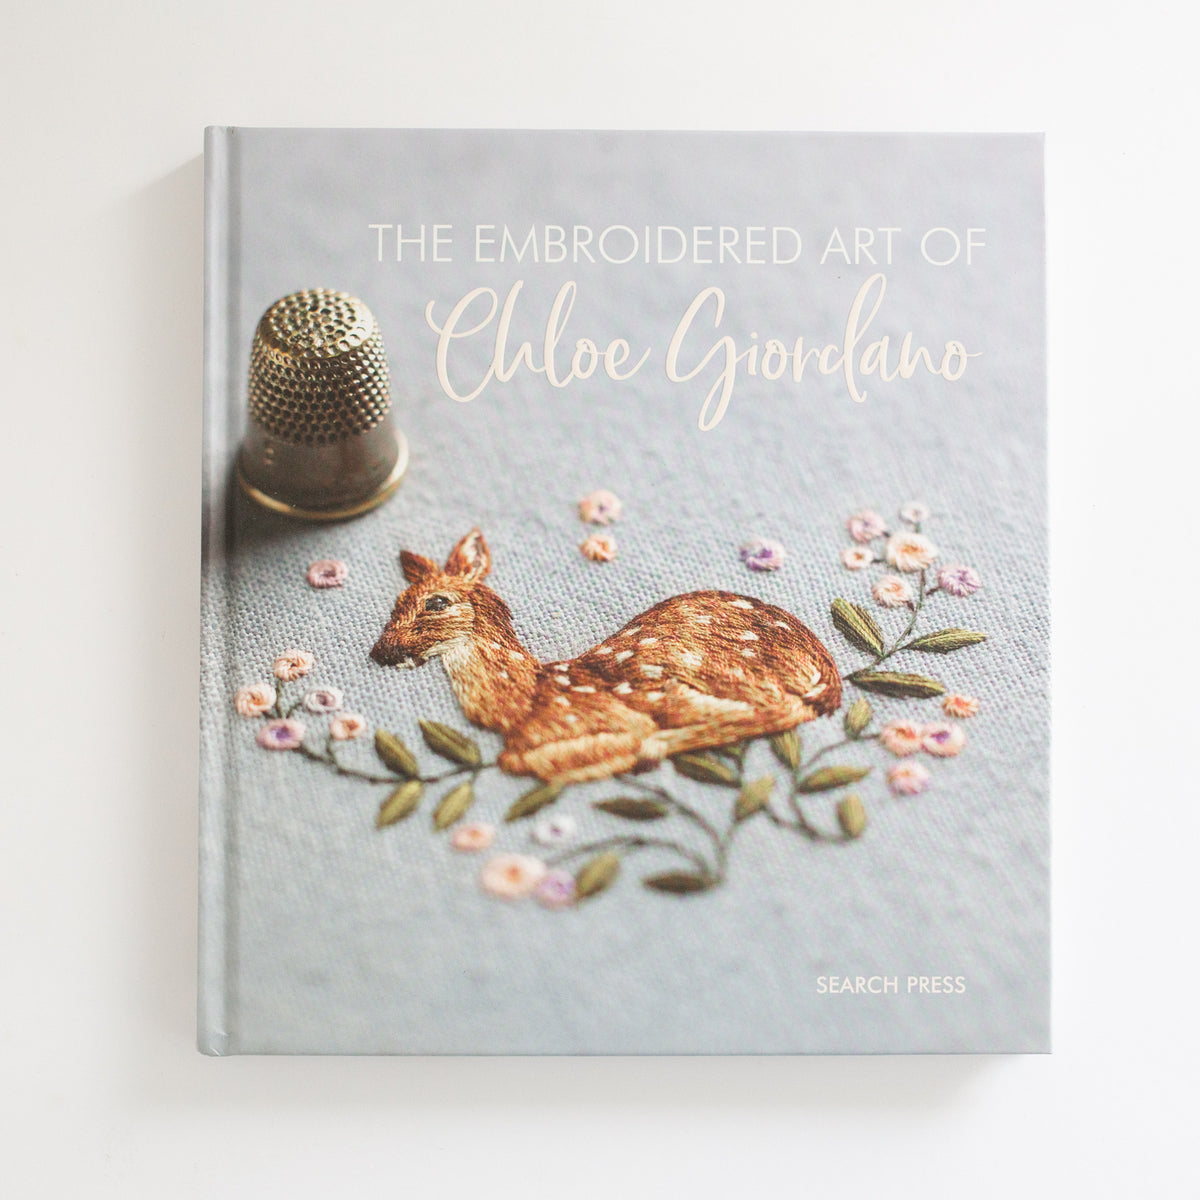 The Embroidered Art of Chloe Giordano' by Chloe Giordano